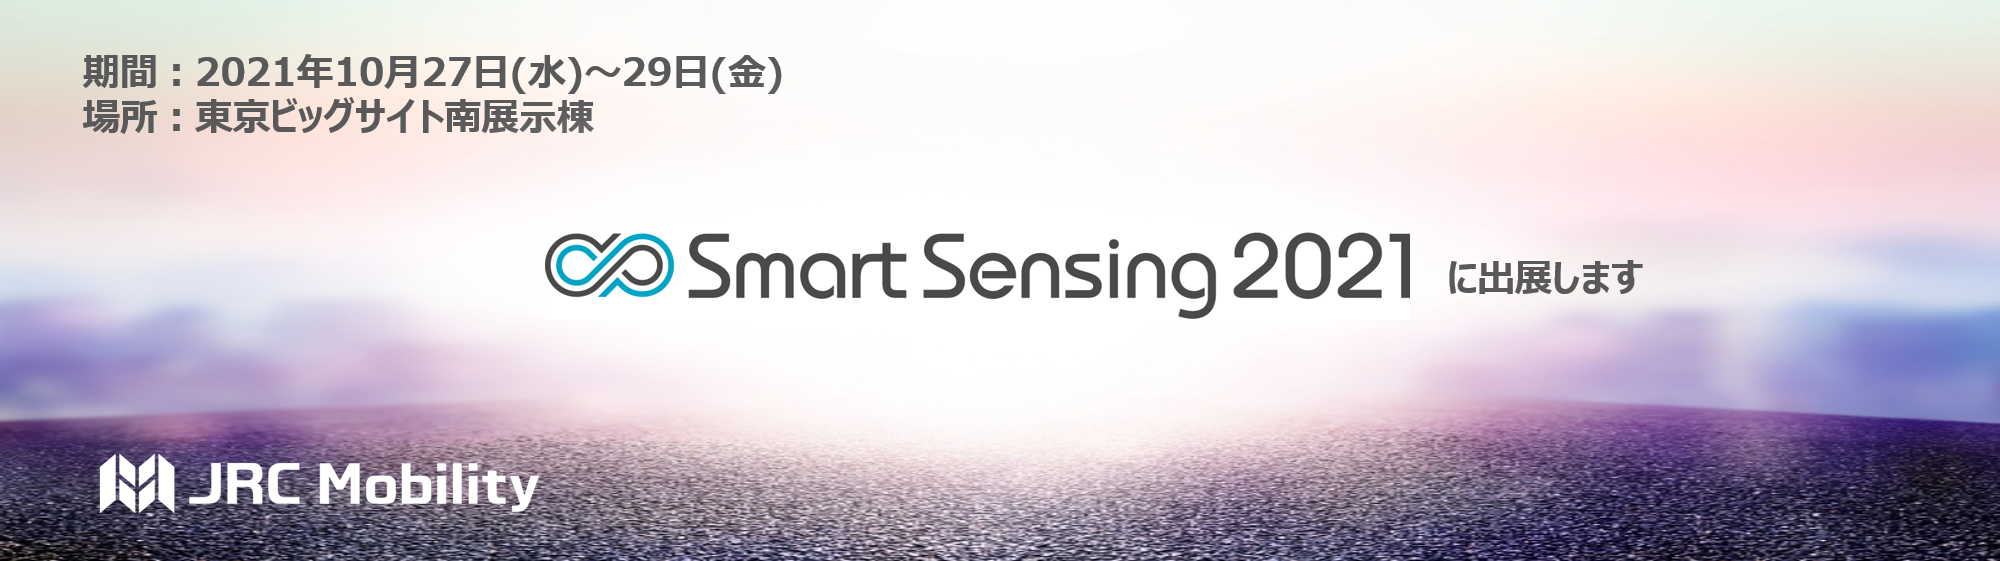 SmartSensing2021